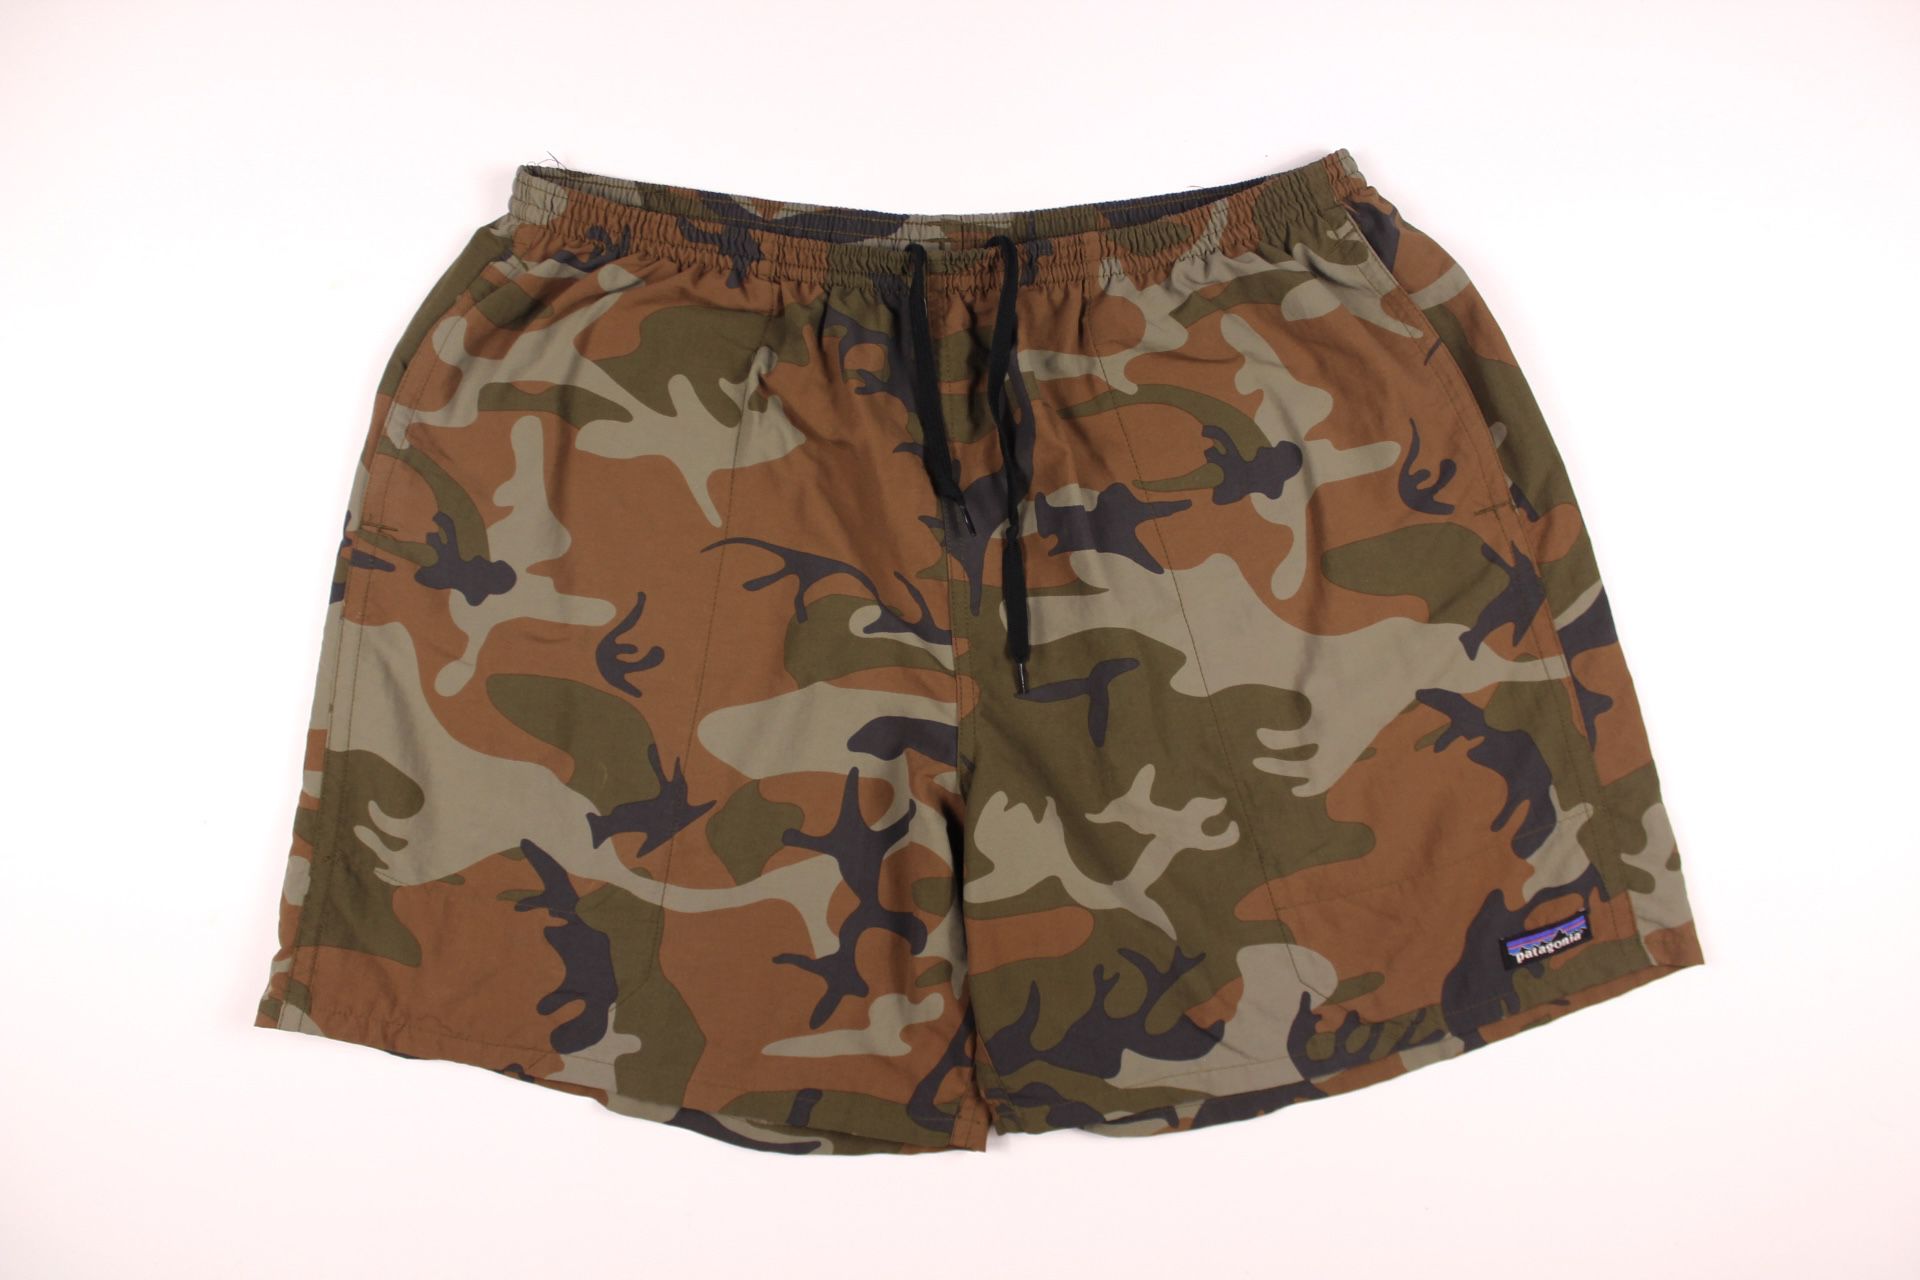 Patagonia men’s Camo Camouflage Baggies Shorts size XL